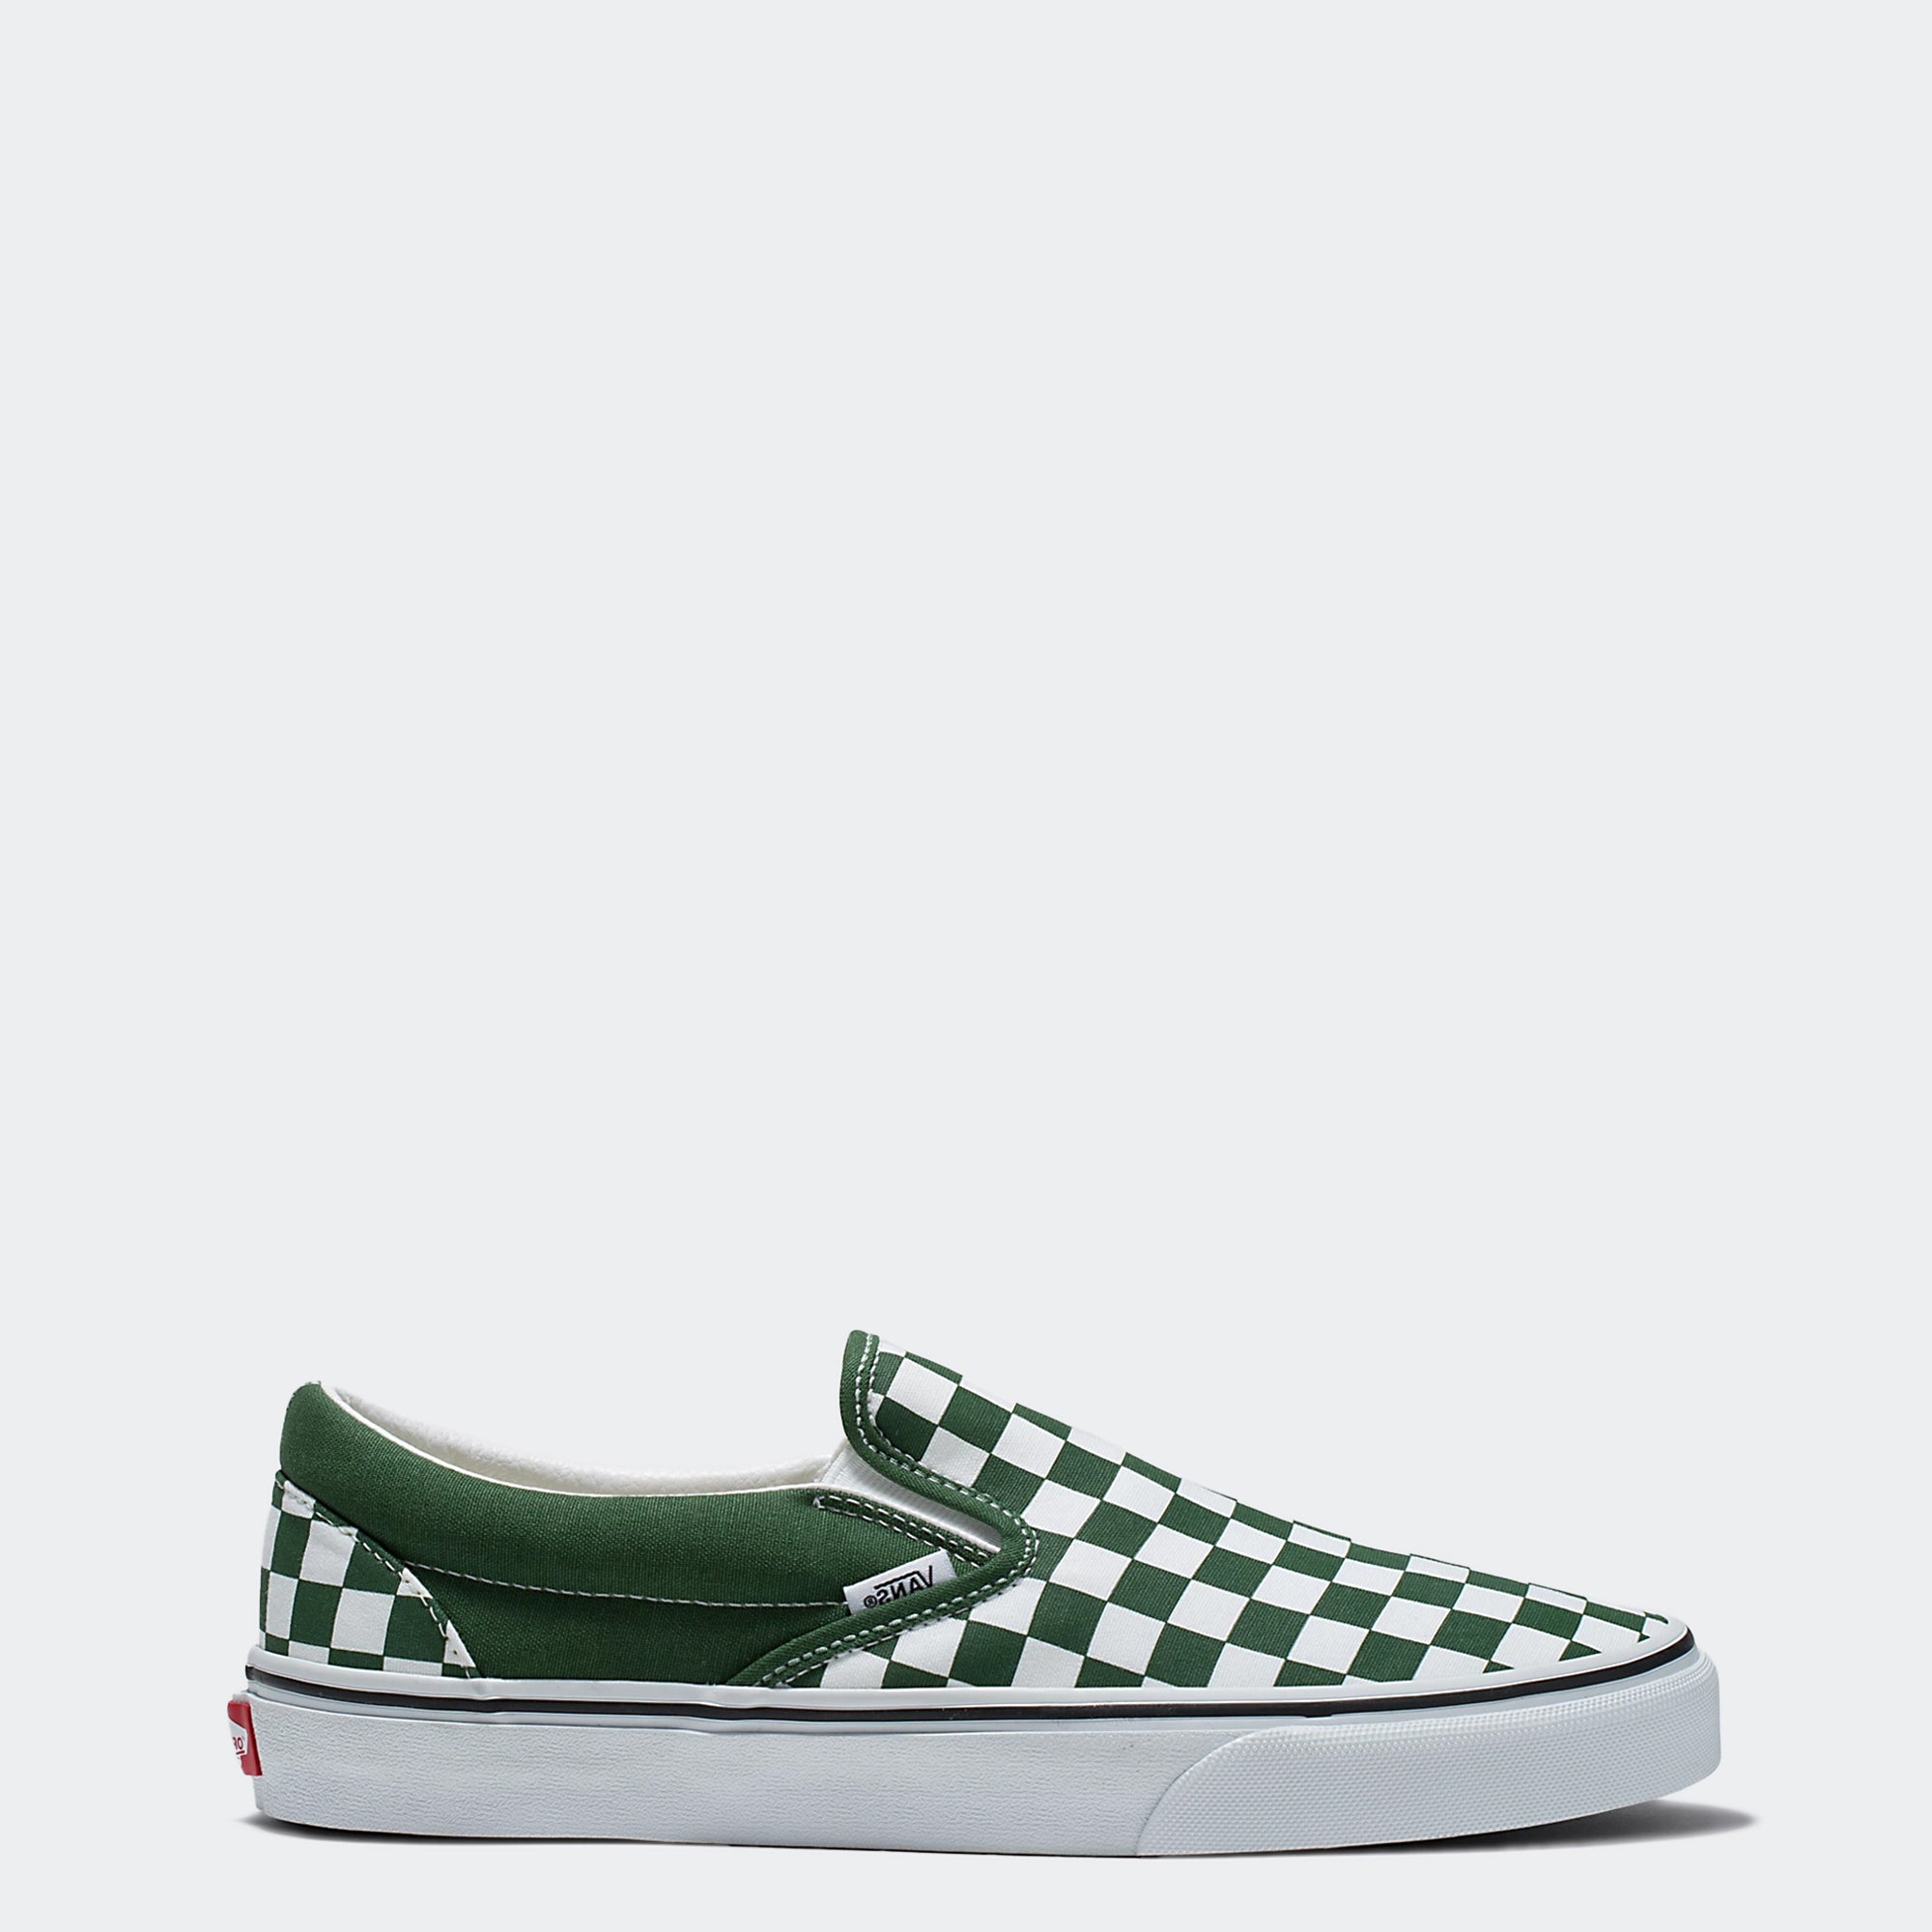 Vans Slip-On Classic checkerboard sneakers in green